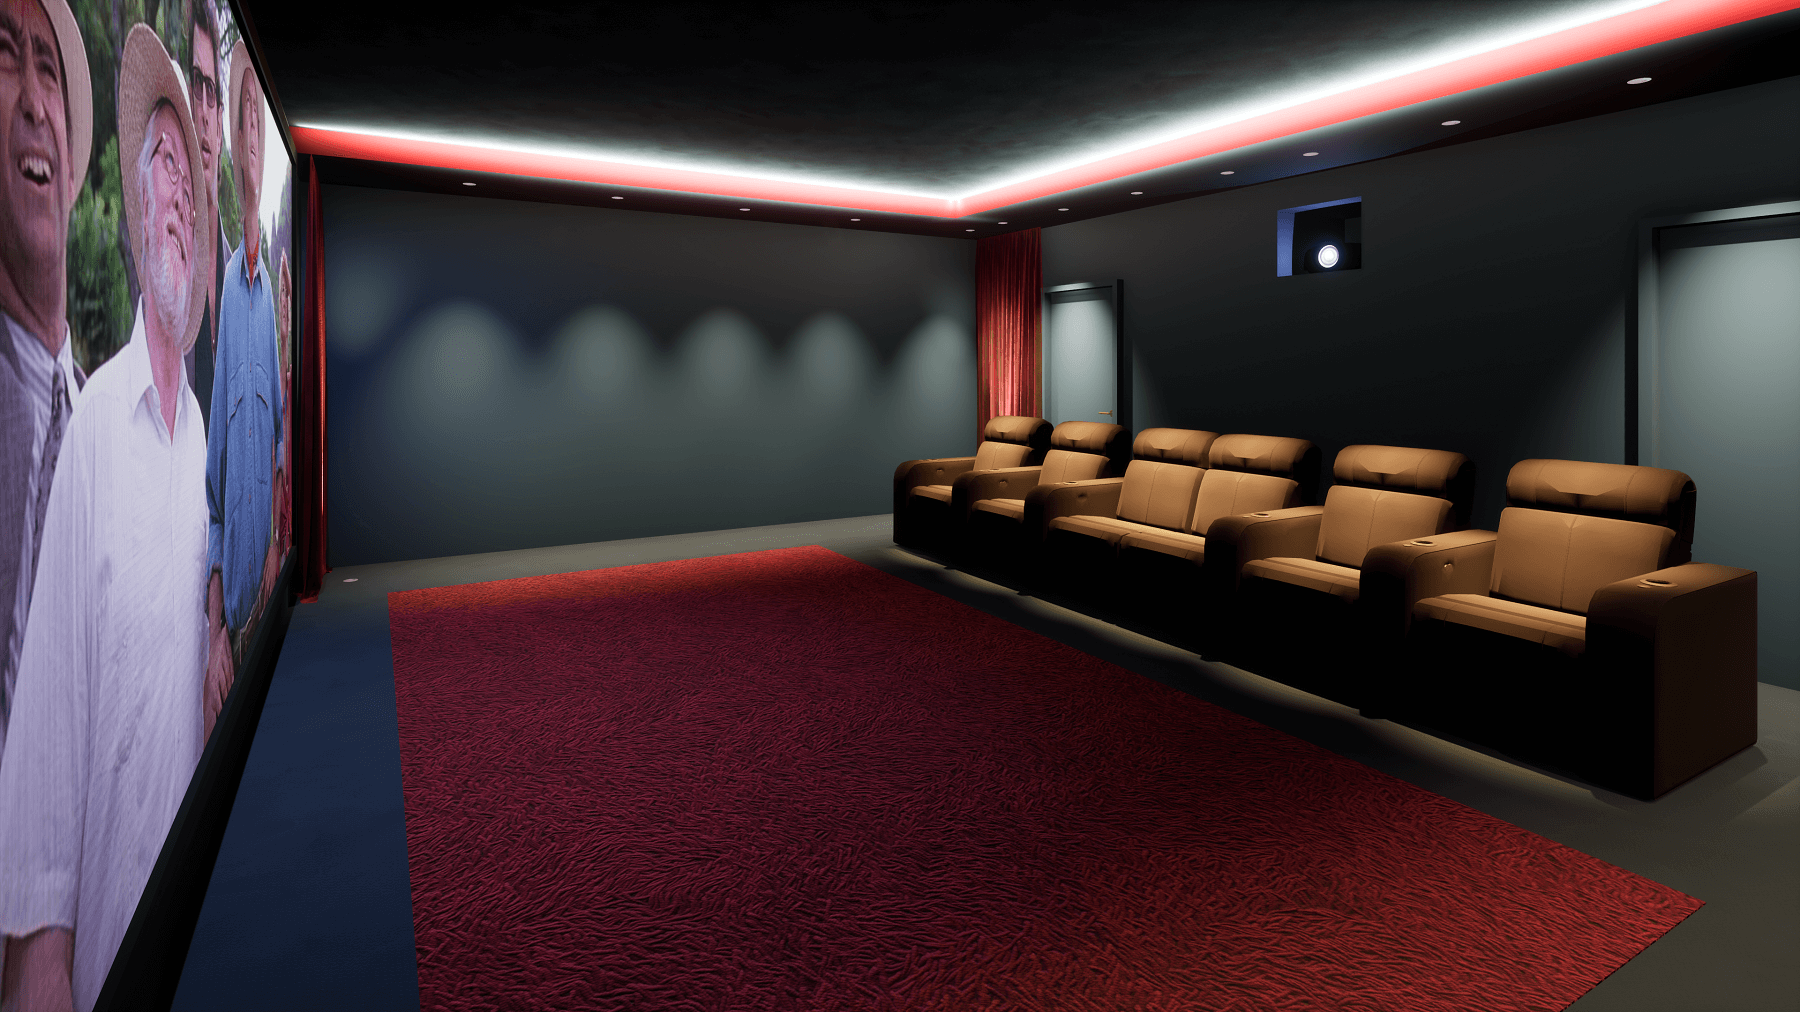 St Georges Hill Cinema Room